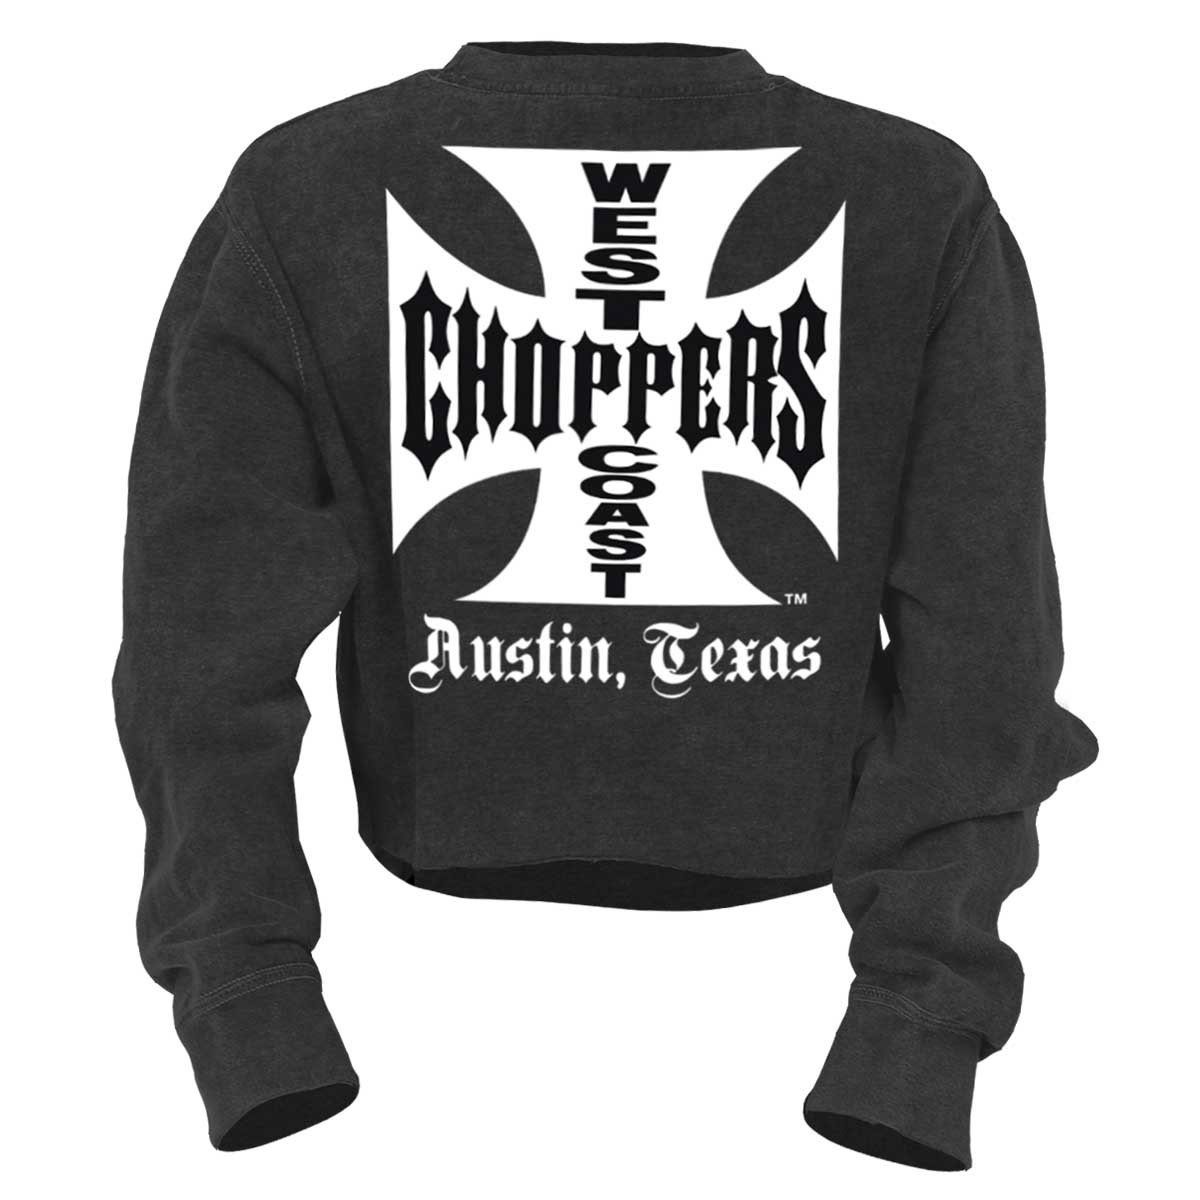 Choppers Damen Sweatshirt Sweatshirt Coast West West Coast Crop OG Choppers